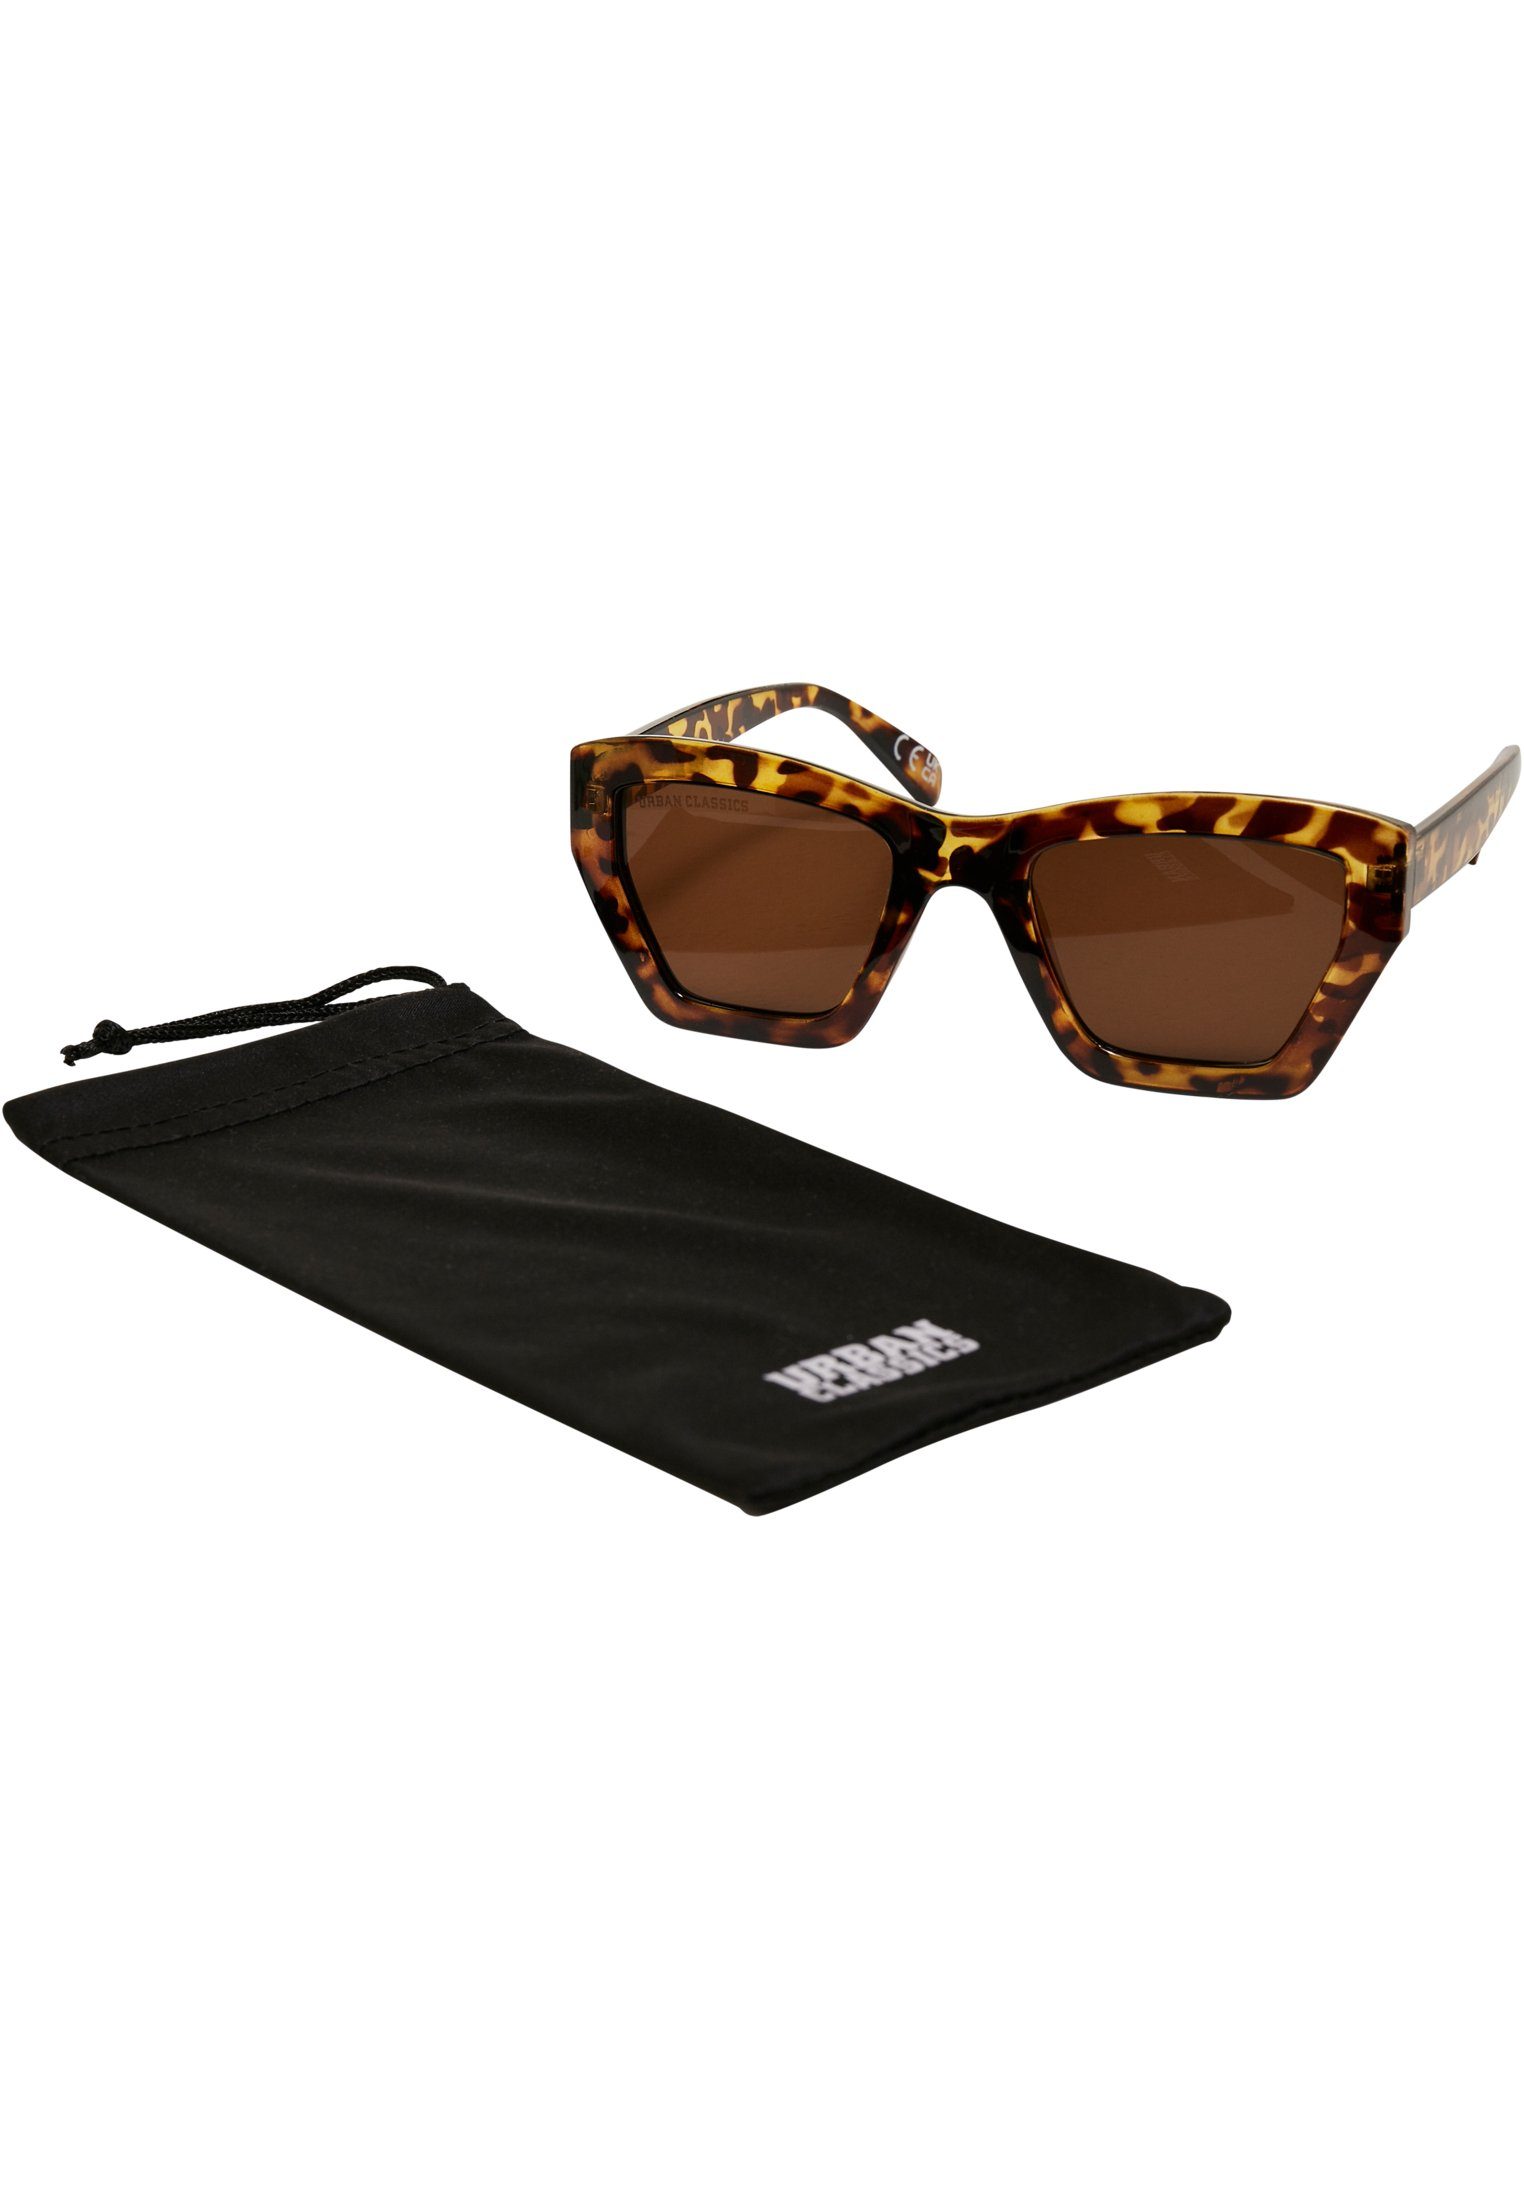 URBAN Grande Sunglasses Rio Unisex CLASSICS Sonnenbrille